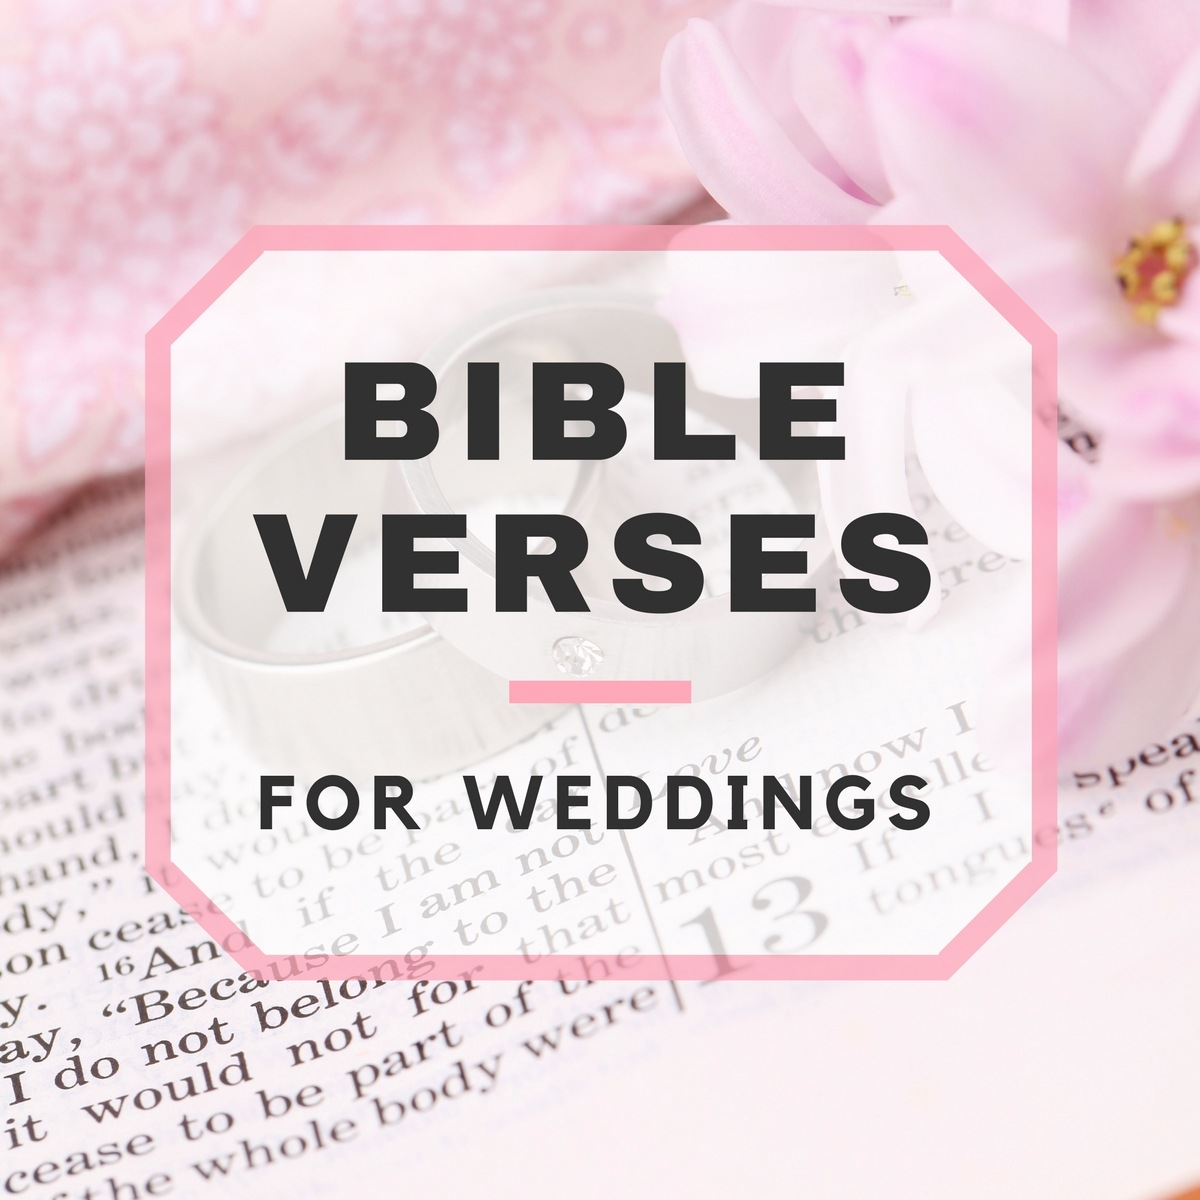 11 Bible Verses for Weddings